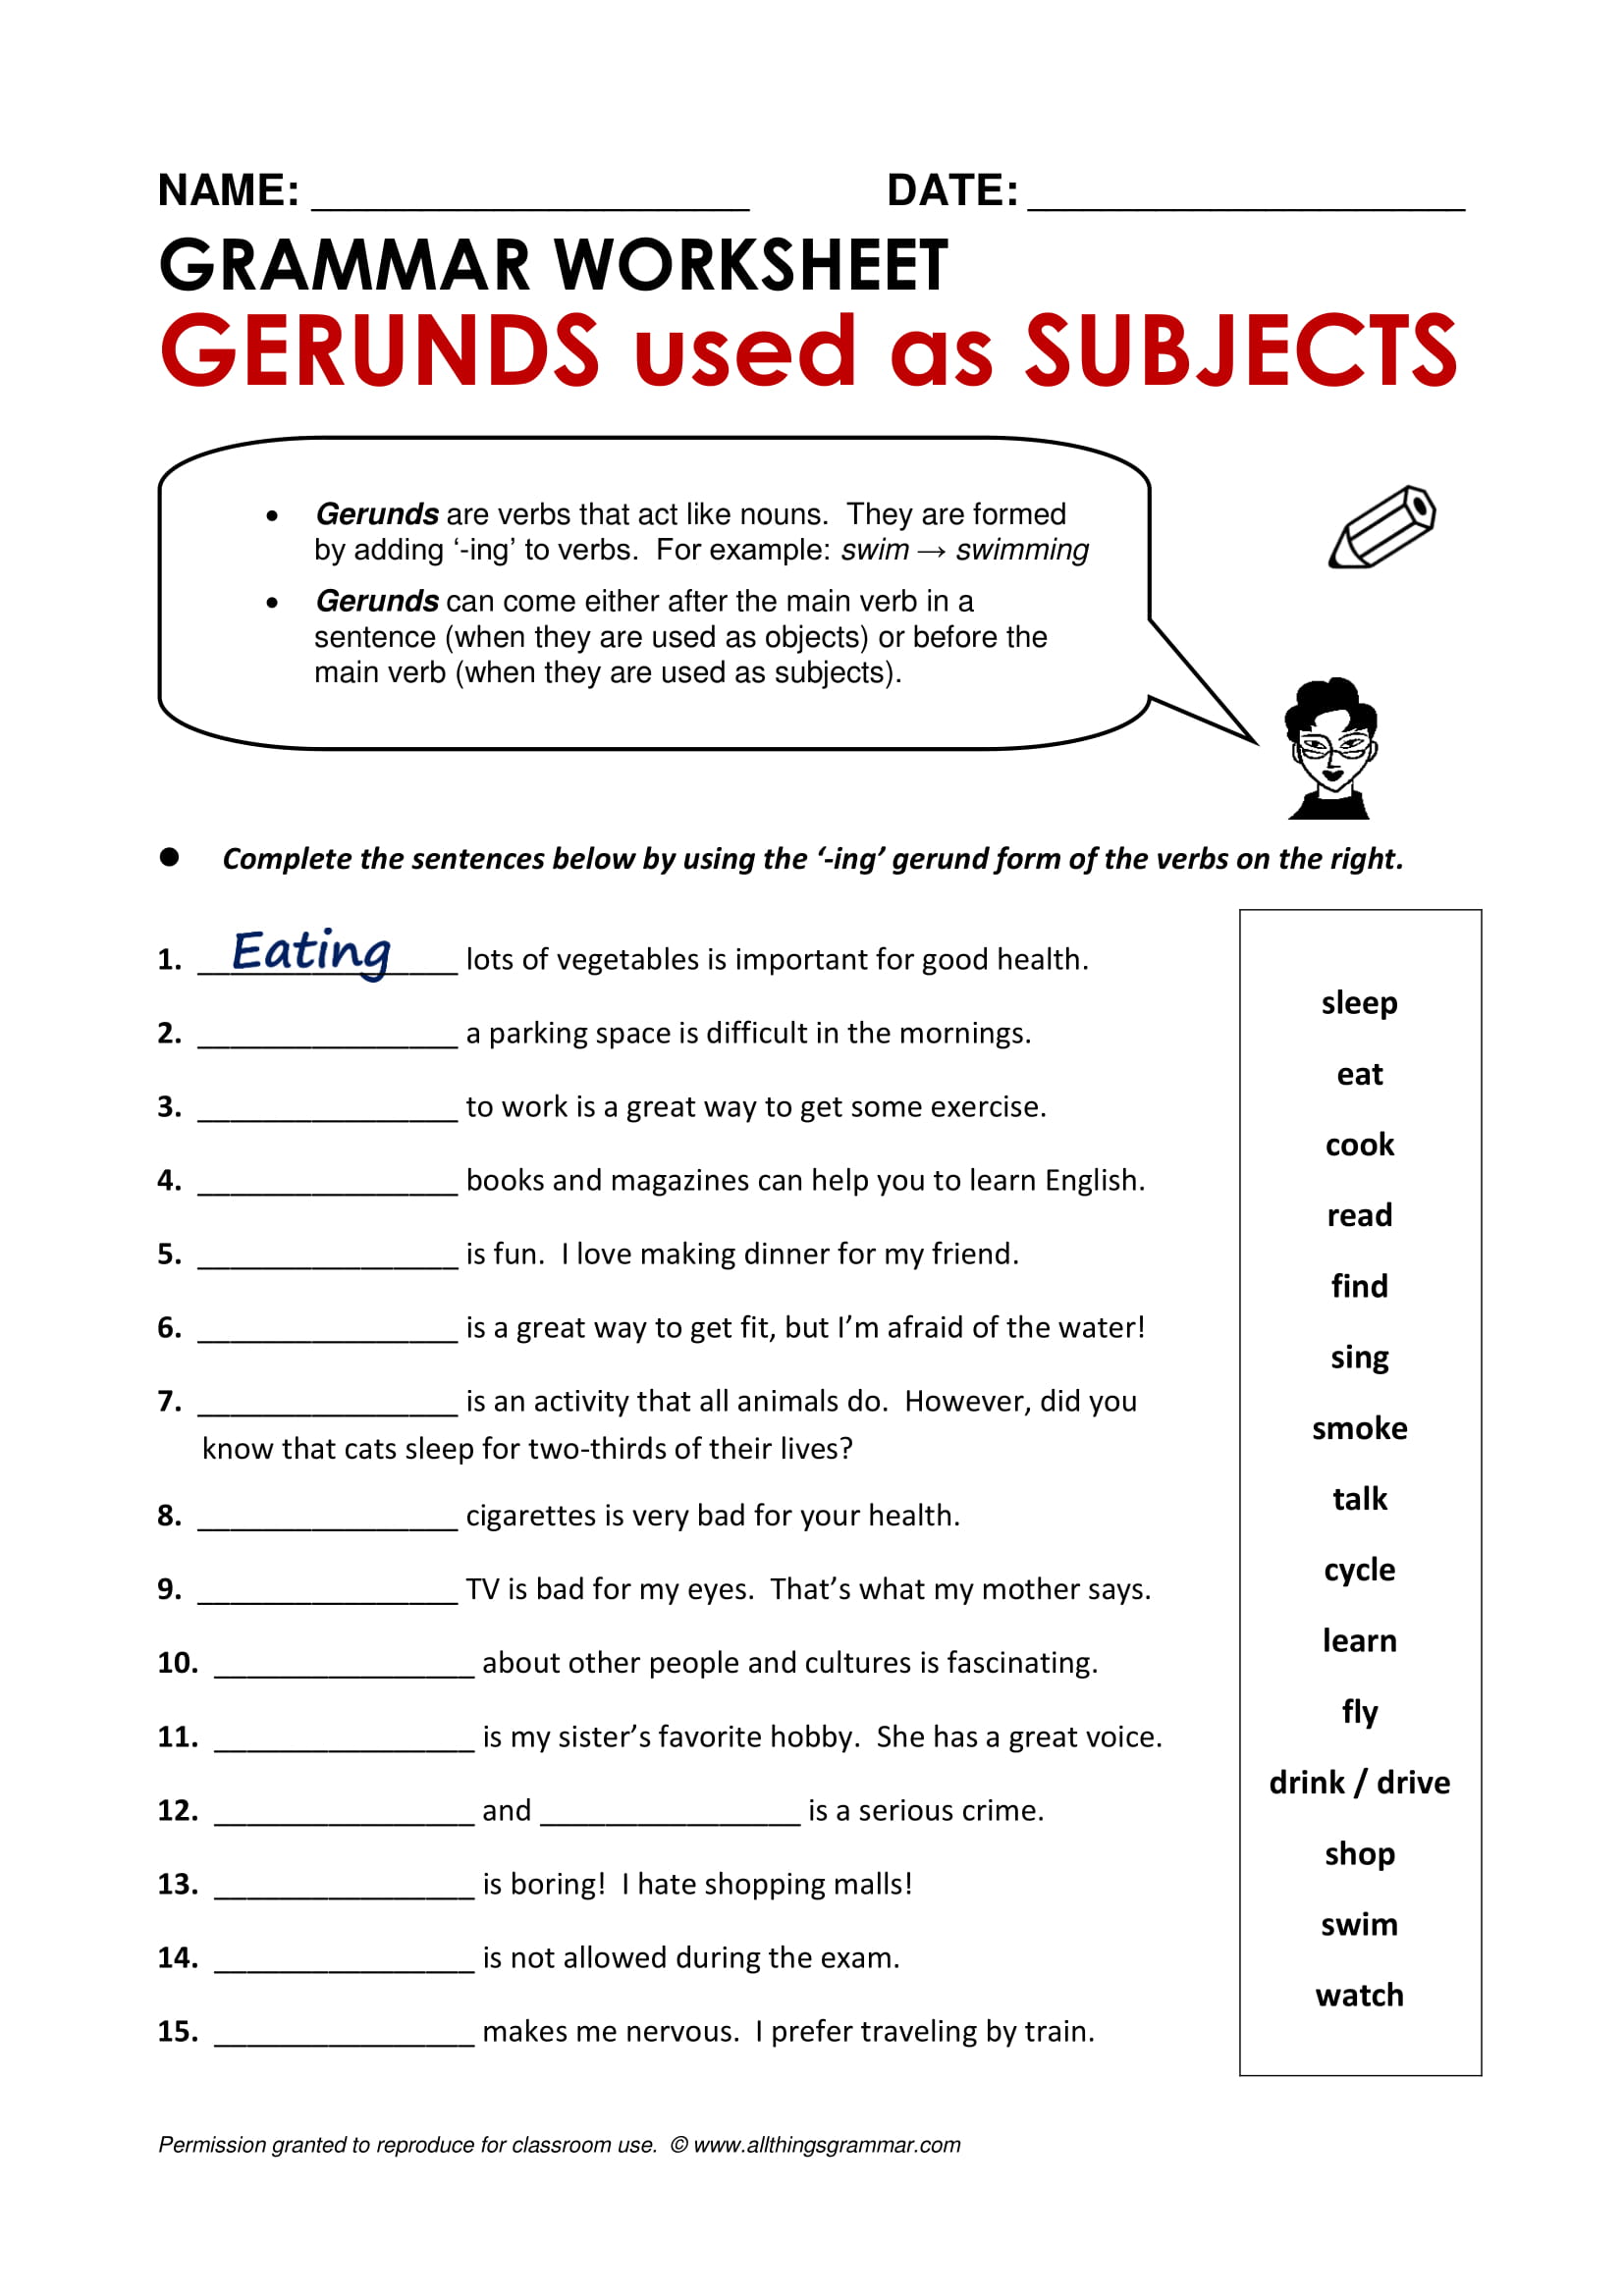 gerund-definition-and-examples-present-participle-vs-gerund-vs